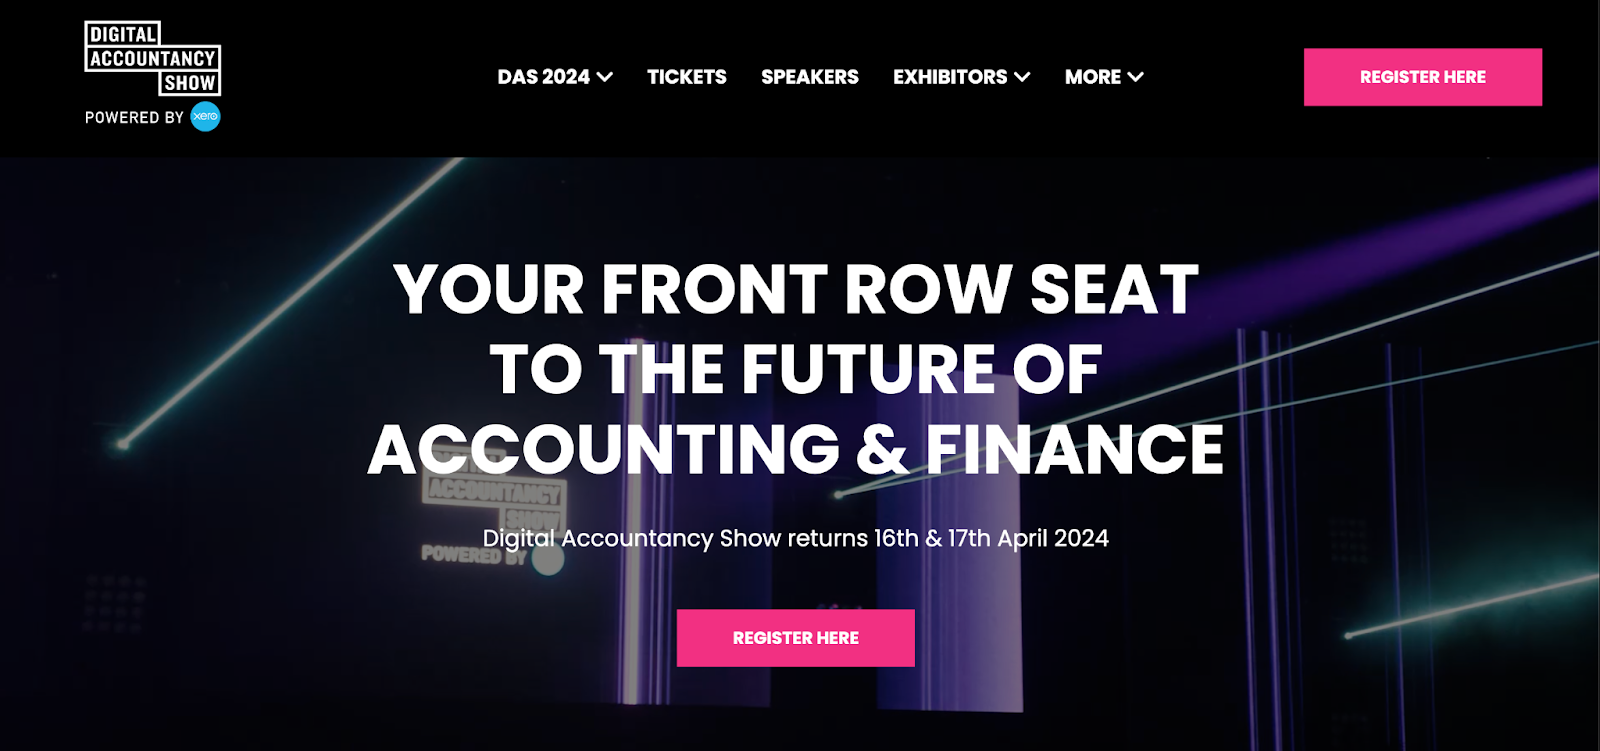 Digital Accountancy Show event banner 2024